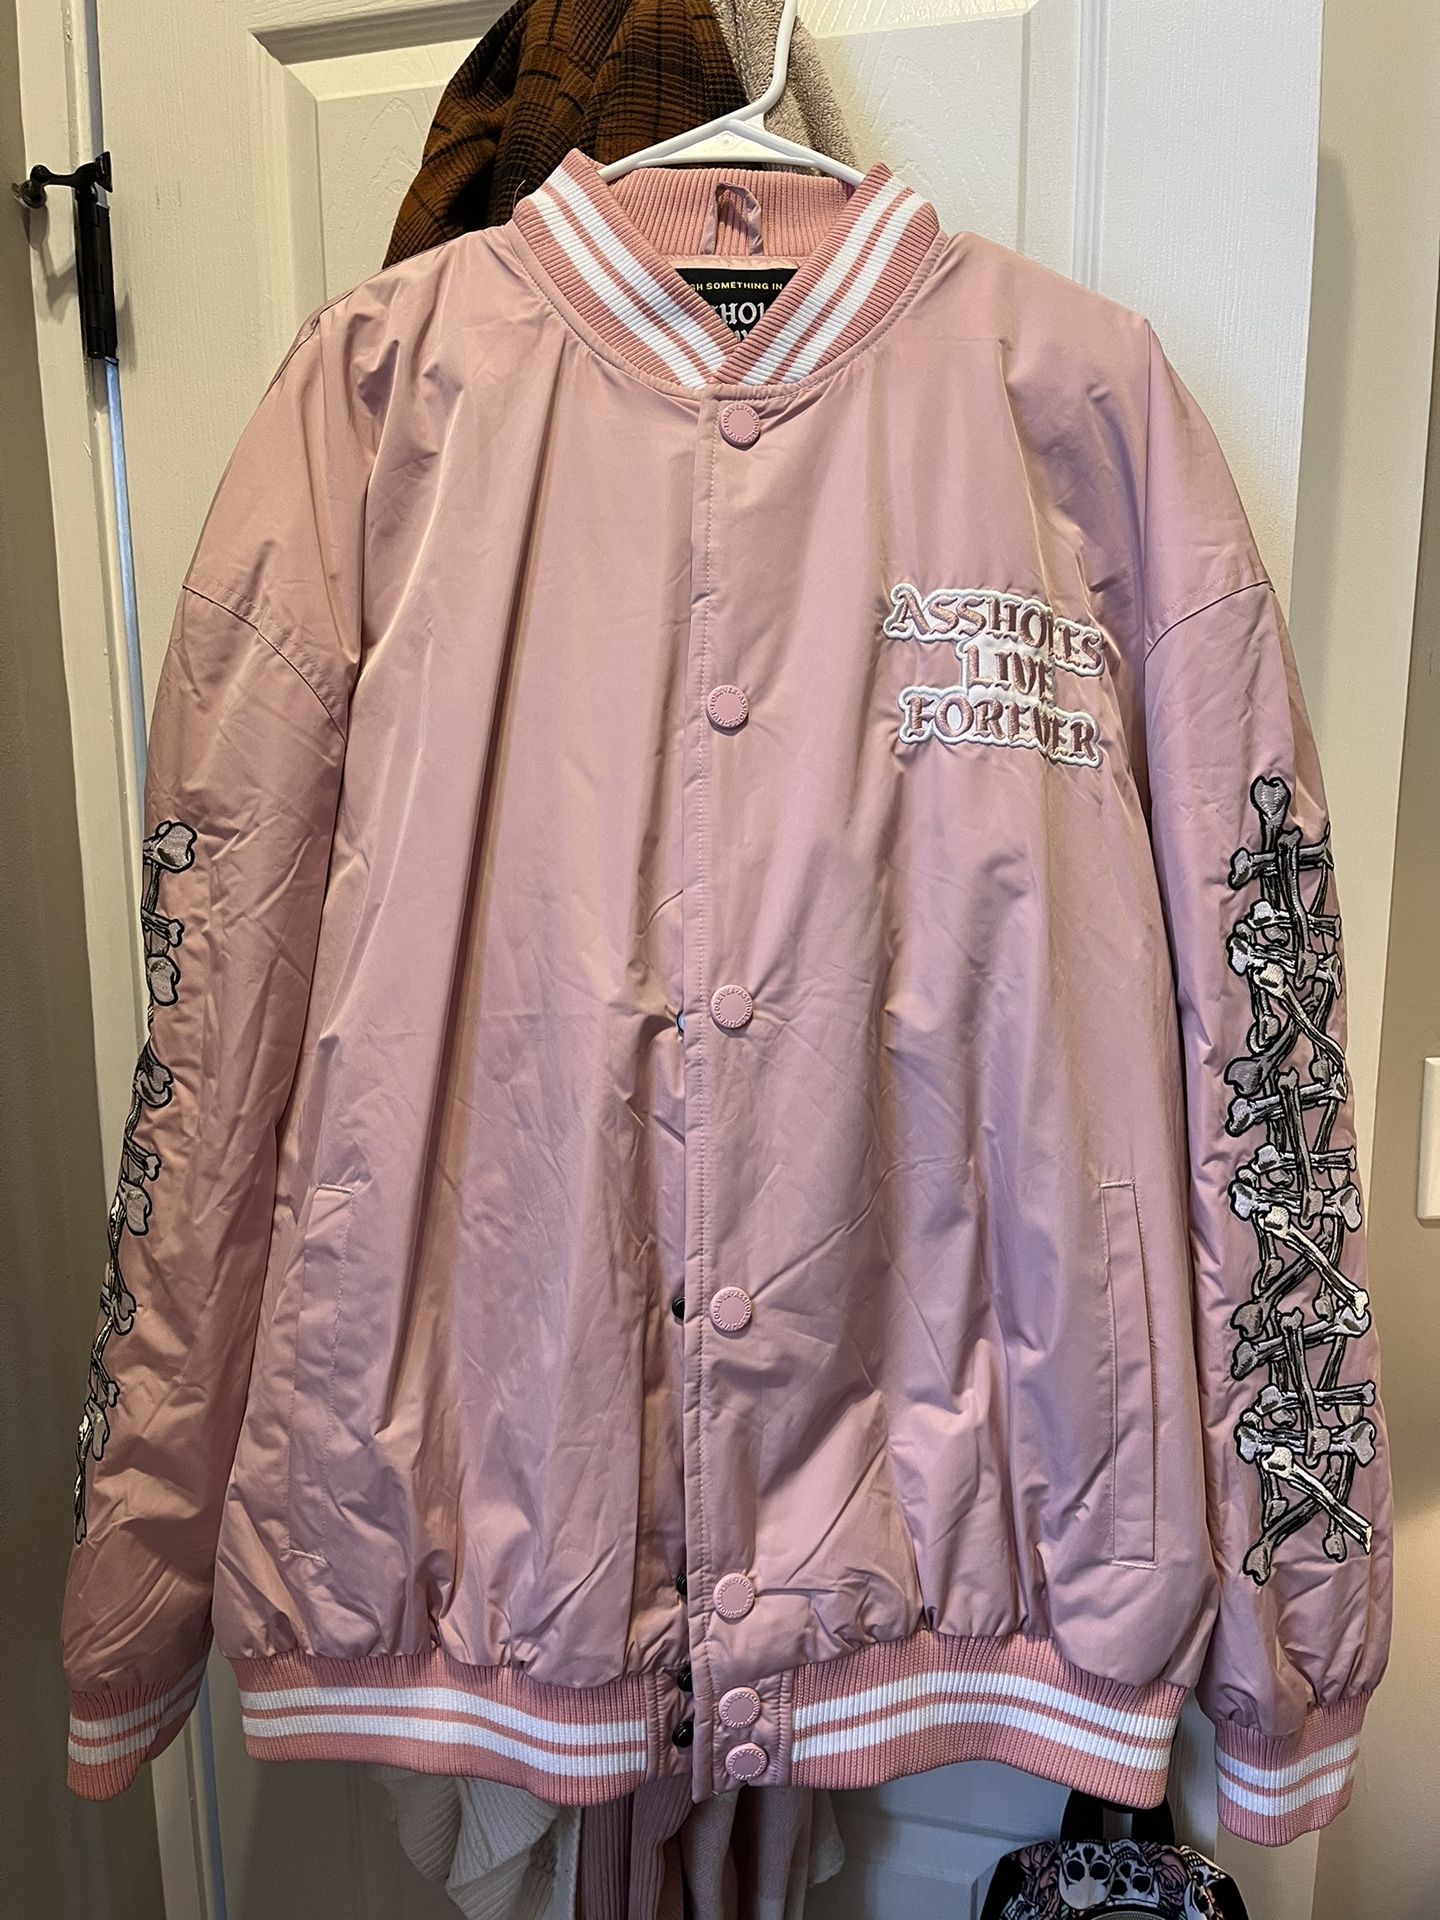 Pink Bomber Jacket